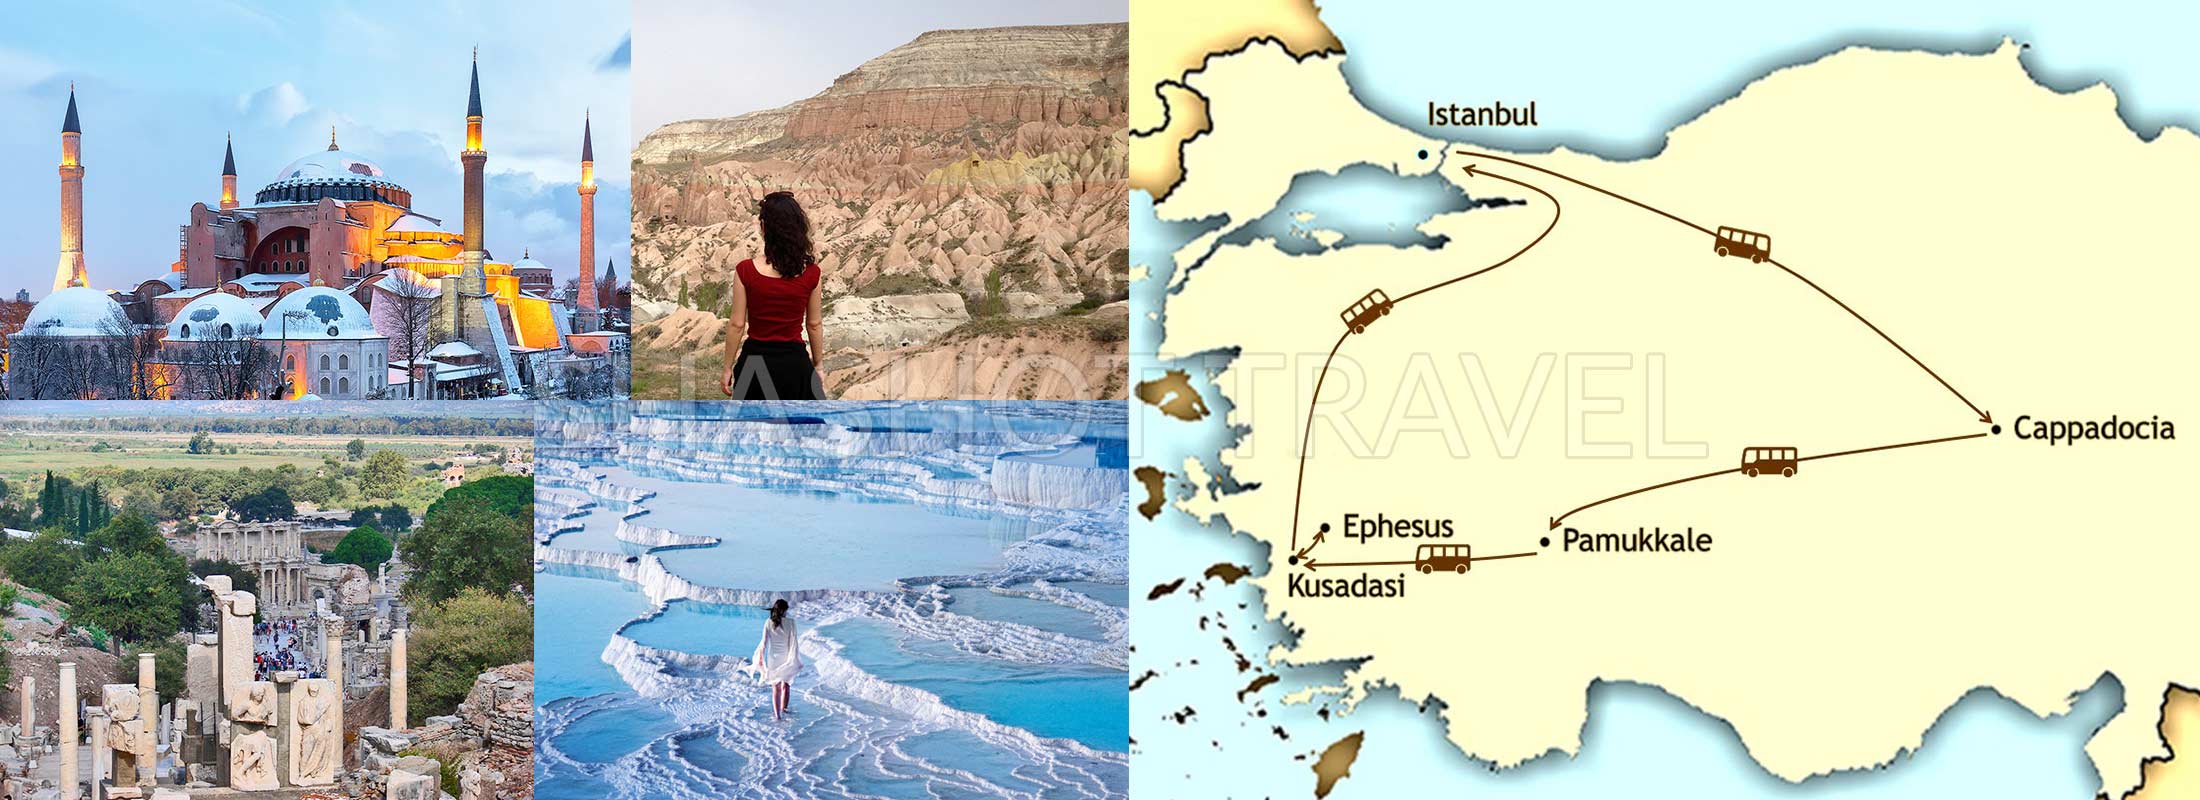 turkey-package-tours-7-days-istanbul-hagia-sophia-museum-blue-mosque-cappadocia-virgin-mary-house-ephesus-pamukkale-hierapolis-map